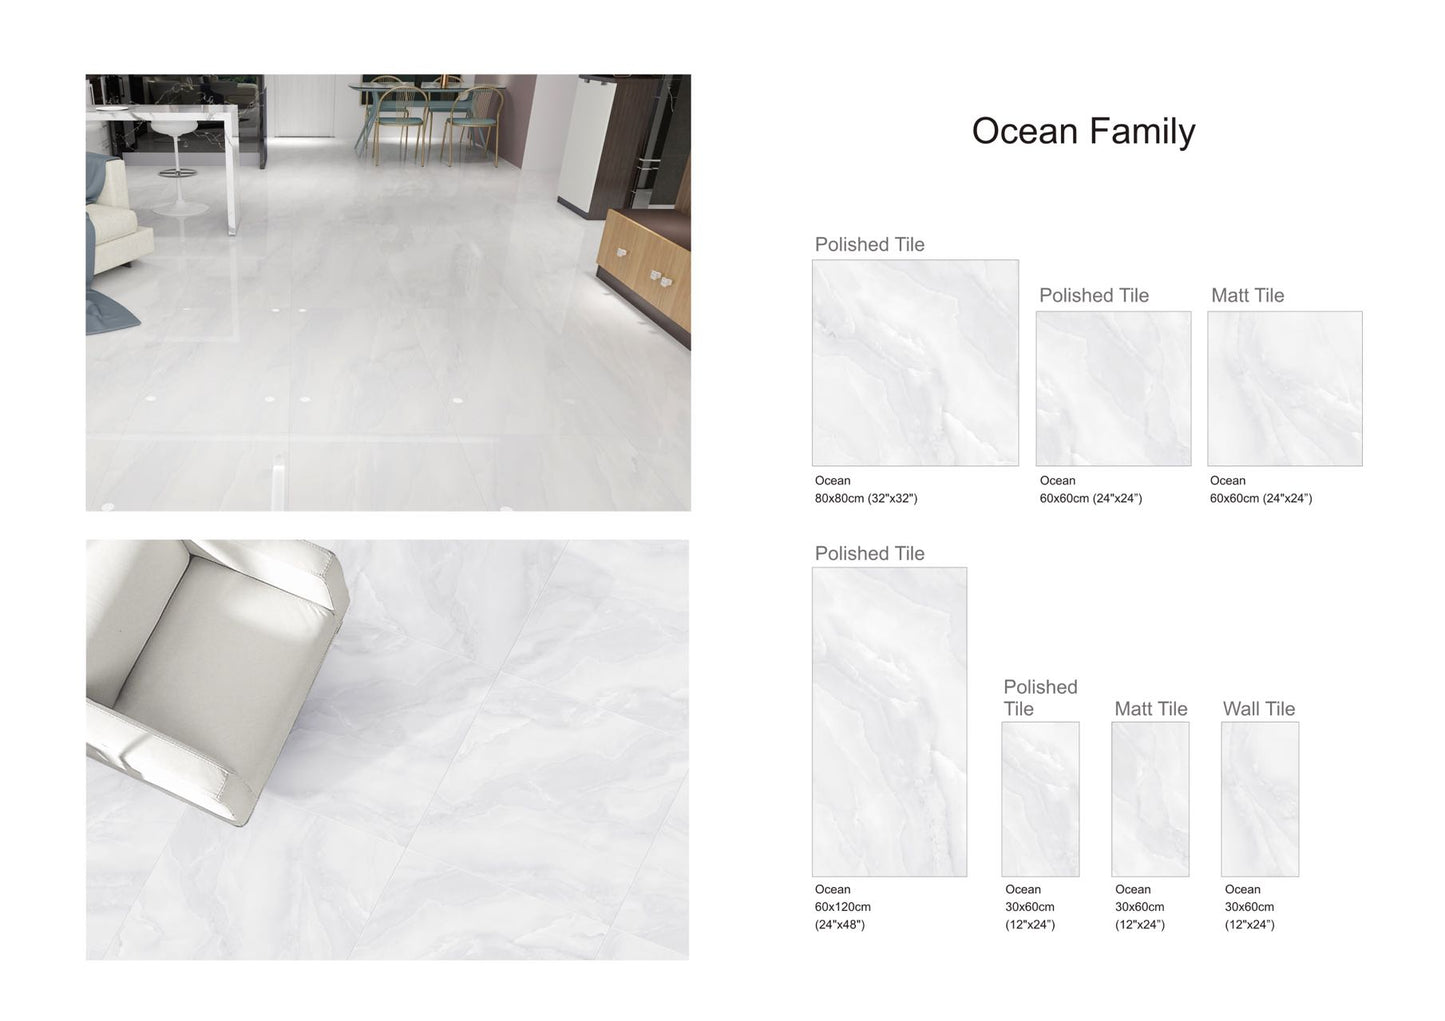 Ocean family Ceramic Wall Tile light gray 12"x24" 8pcs/box 16sf/box $23.84/box $1.49/sf 3000SF+ $1.39/sf